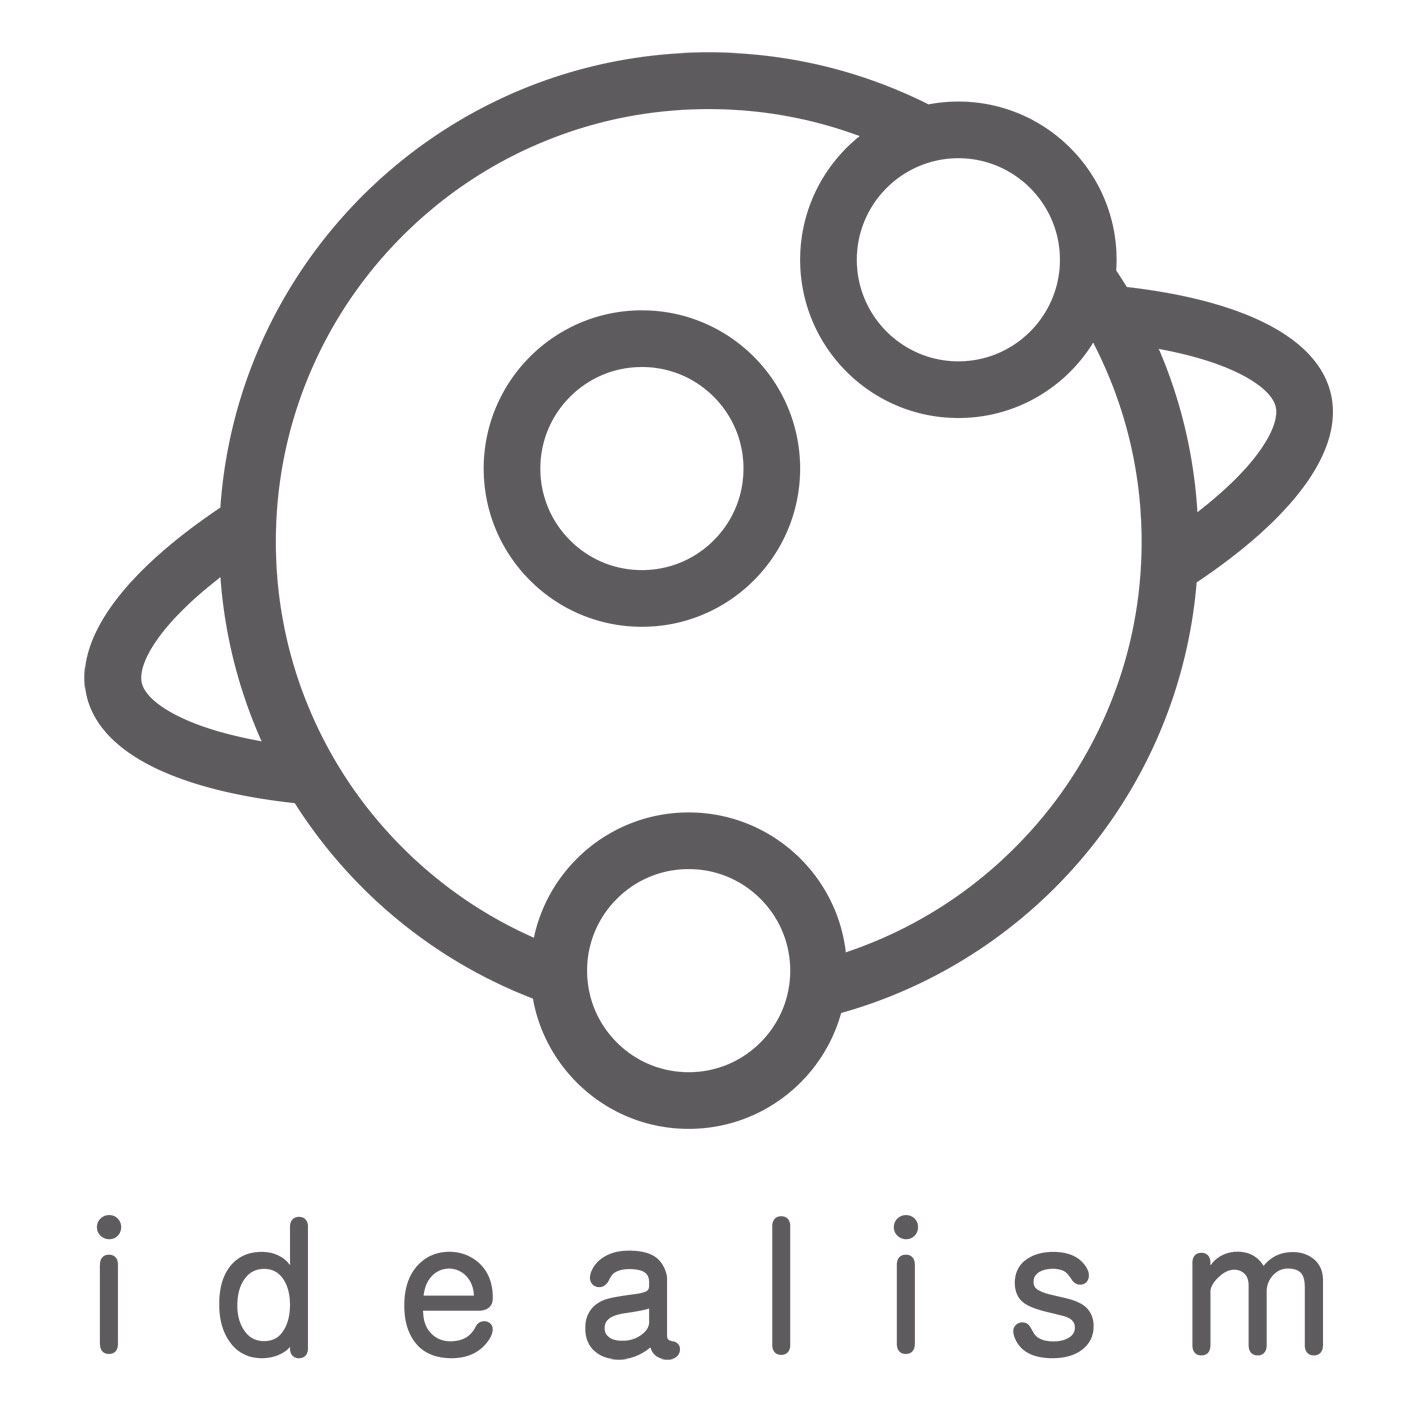 理想主义 Idealism